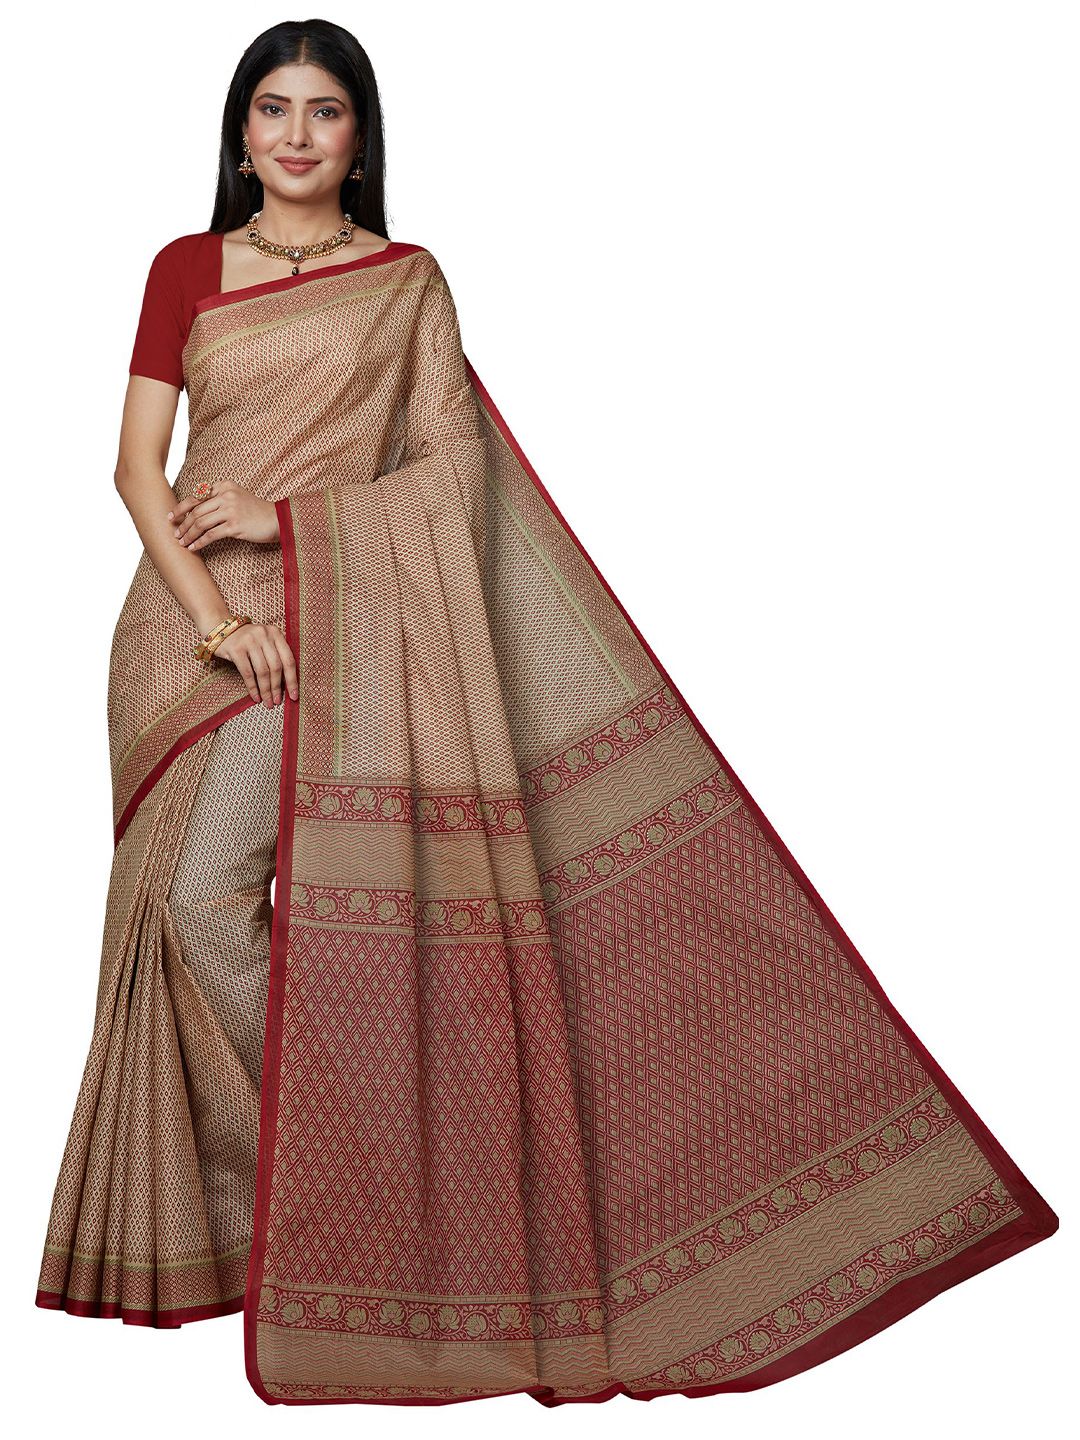 SHANVIKA Beige & Maroon Pure Cotton  Block Print Saree Price in India